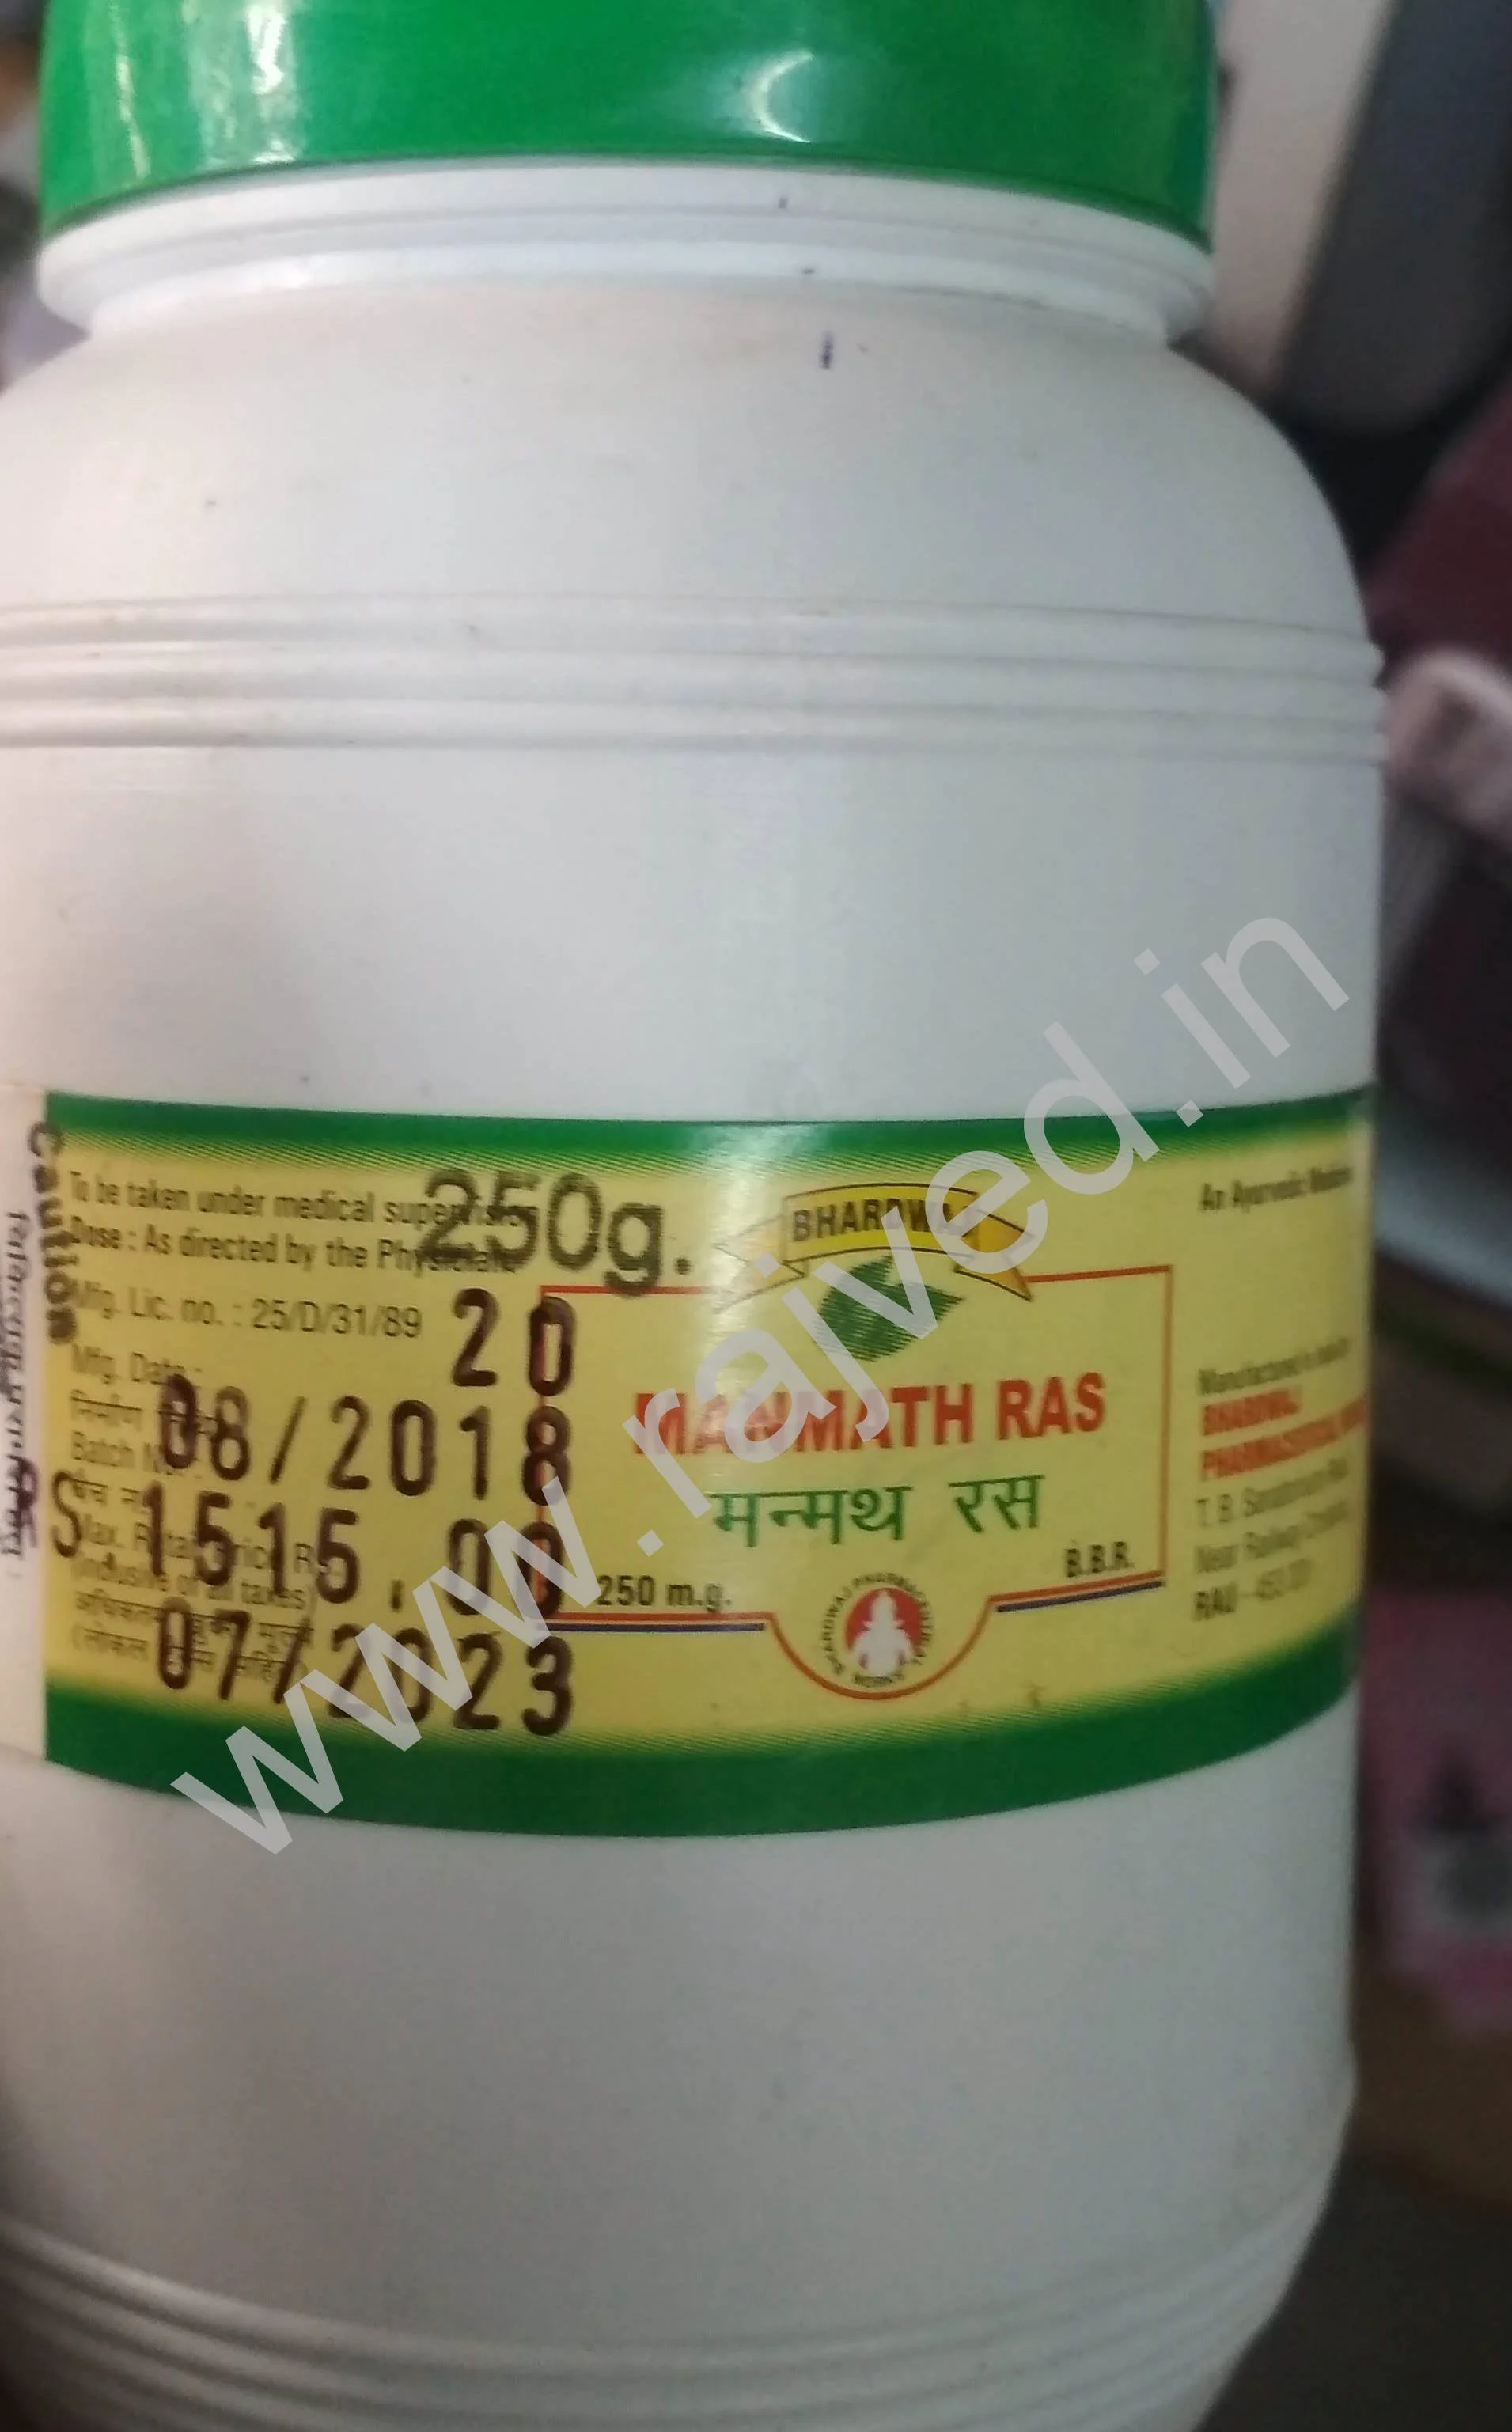 manmath ras 1 kg upto 20% off free shipping bhardwaj pharmaceuticals indore